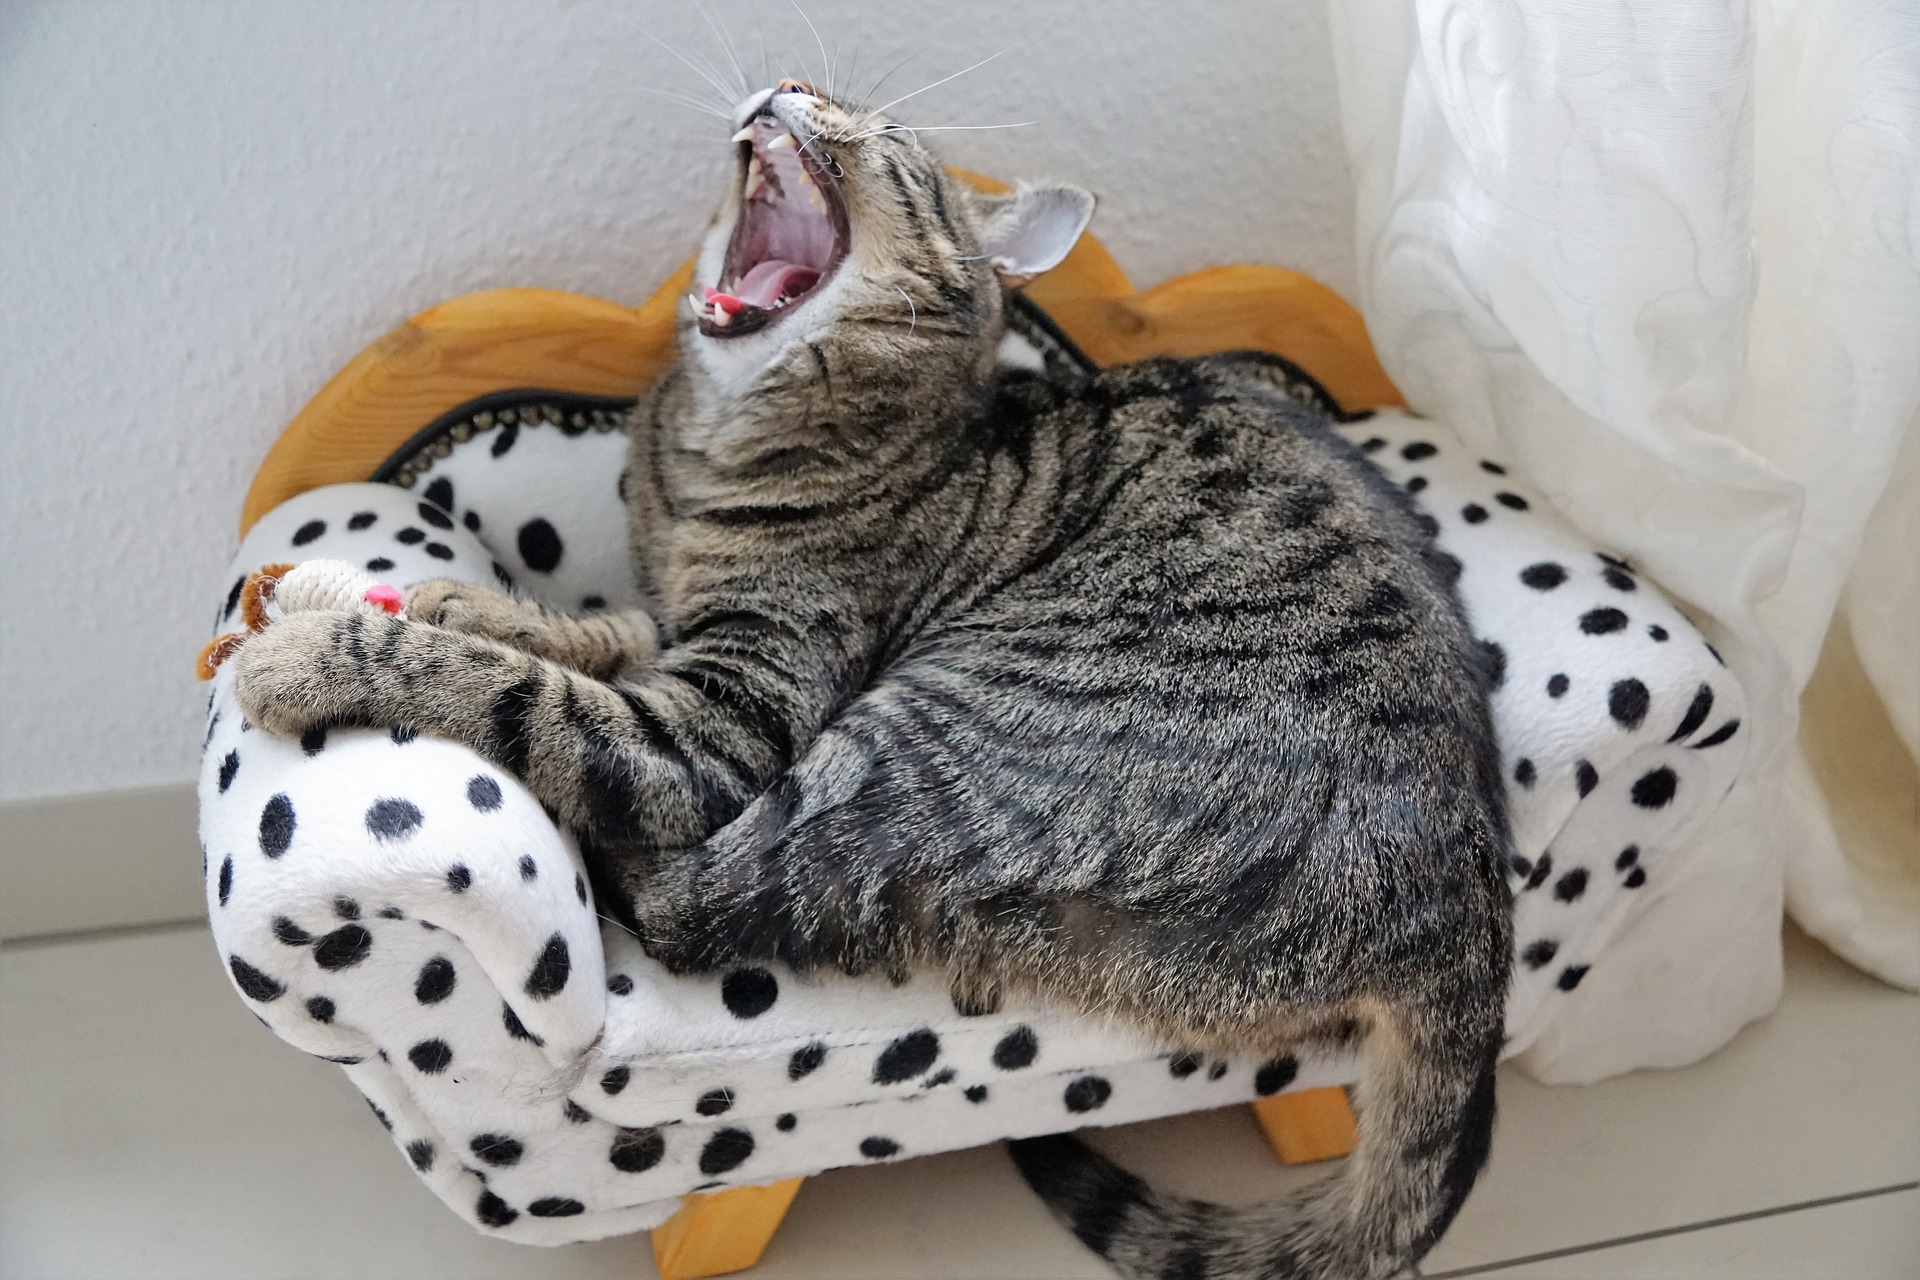 yelling cat sitting on a tiny polka dot sofa